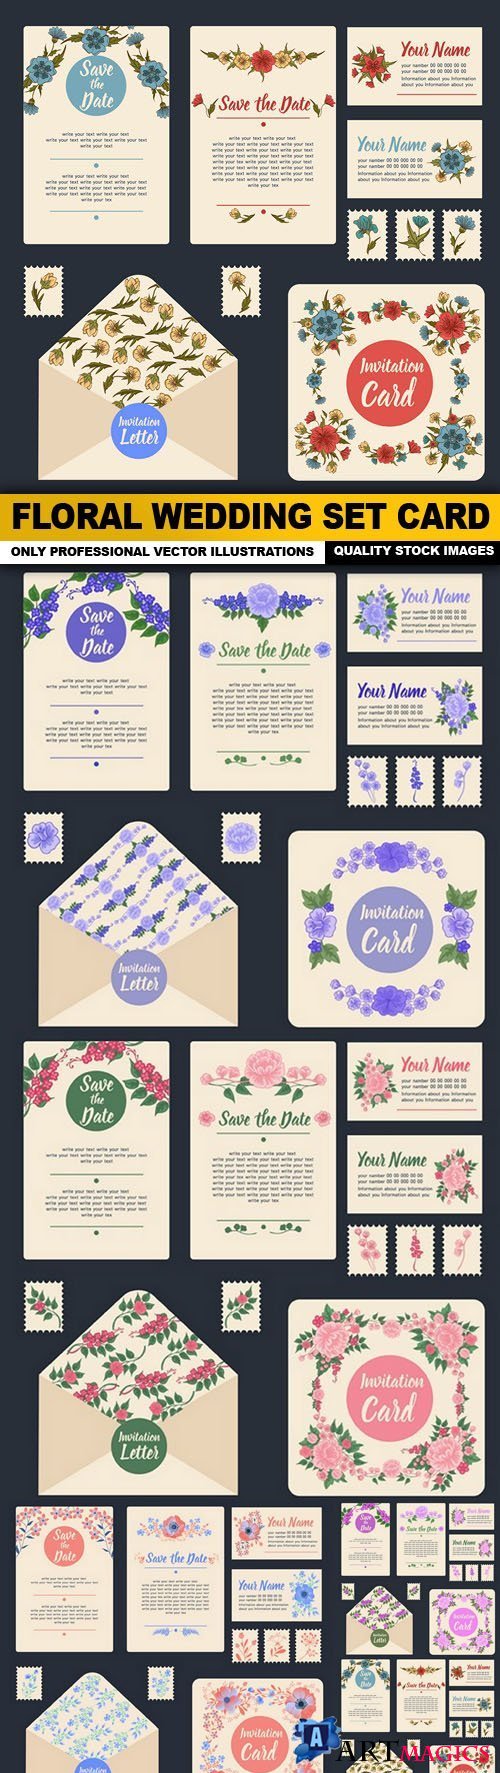 Floral Wedding Set Card - 5 Vector